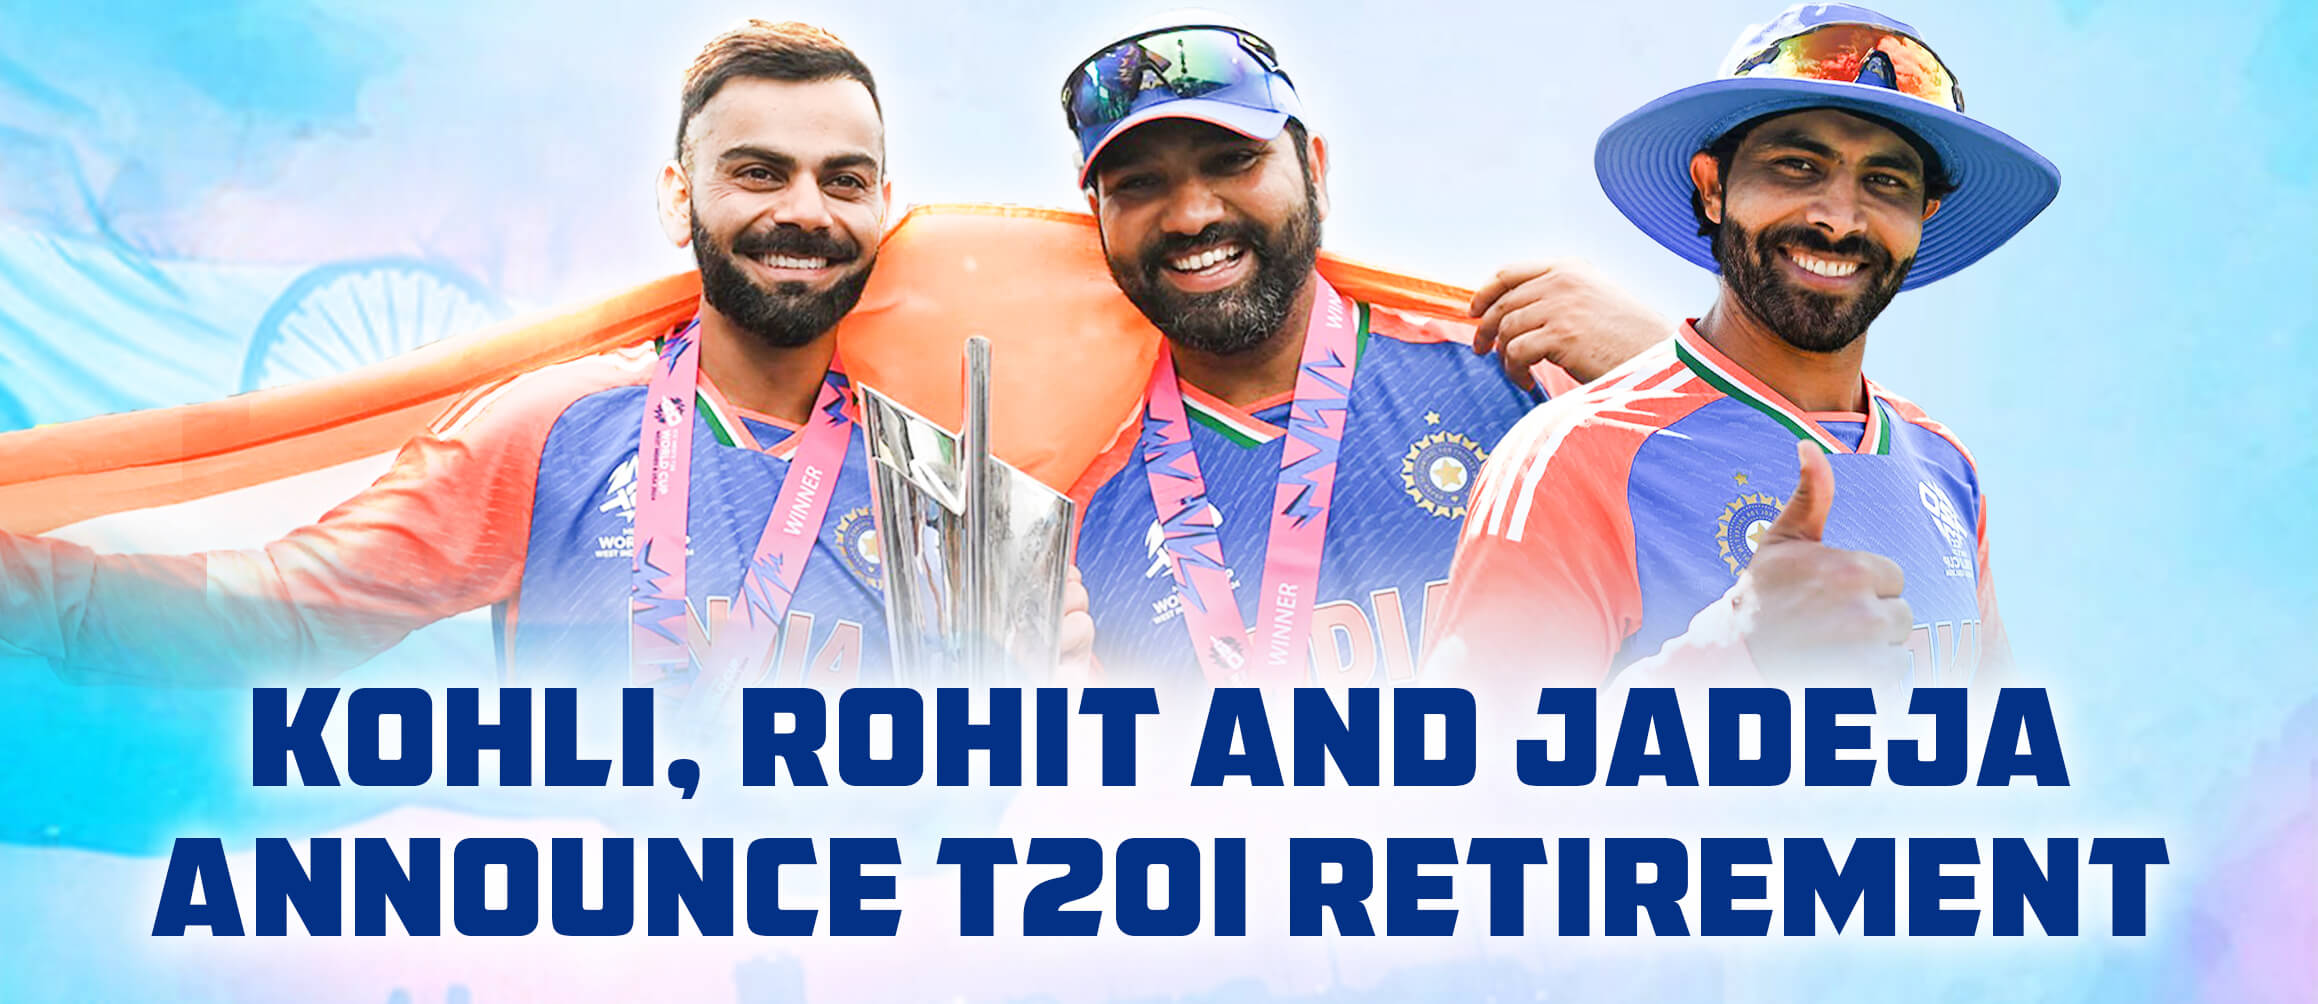 Kohli, Rohit and Jadeja Announce T20I Retirement